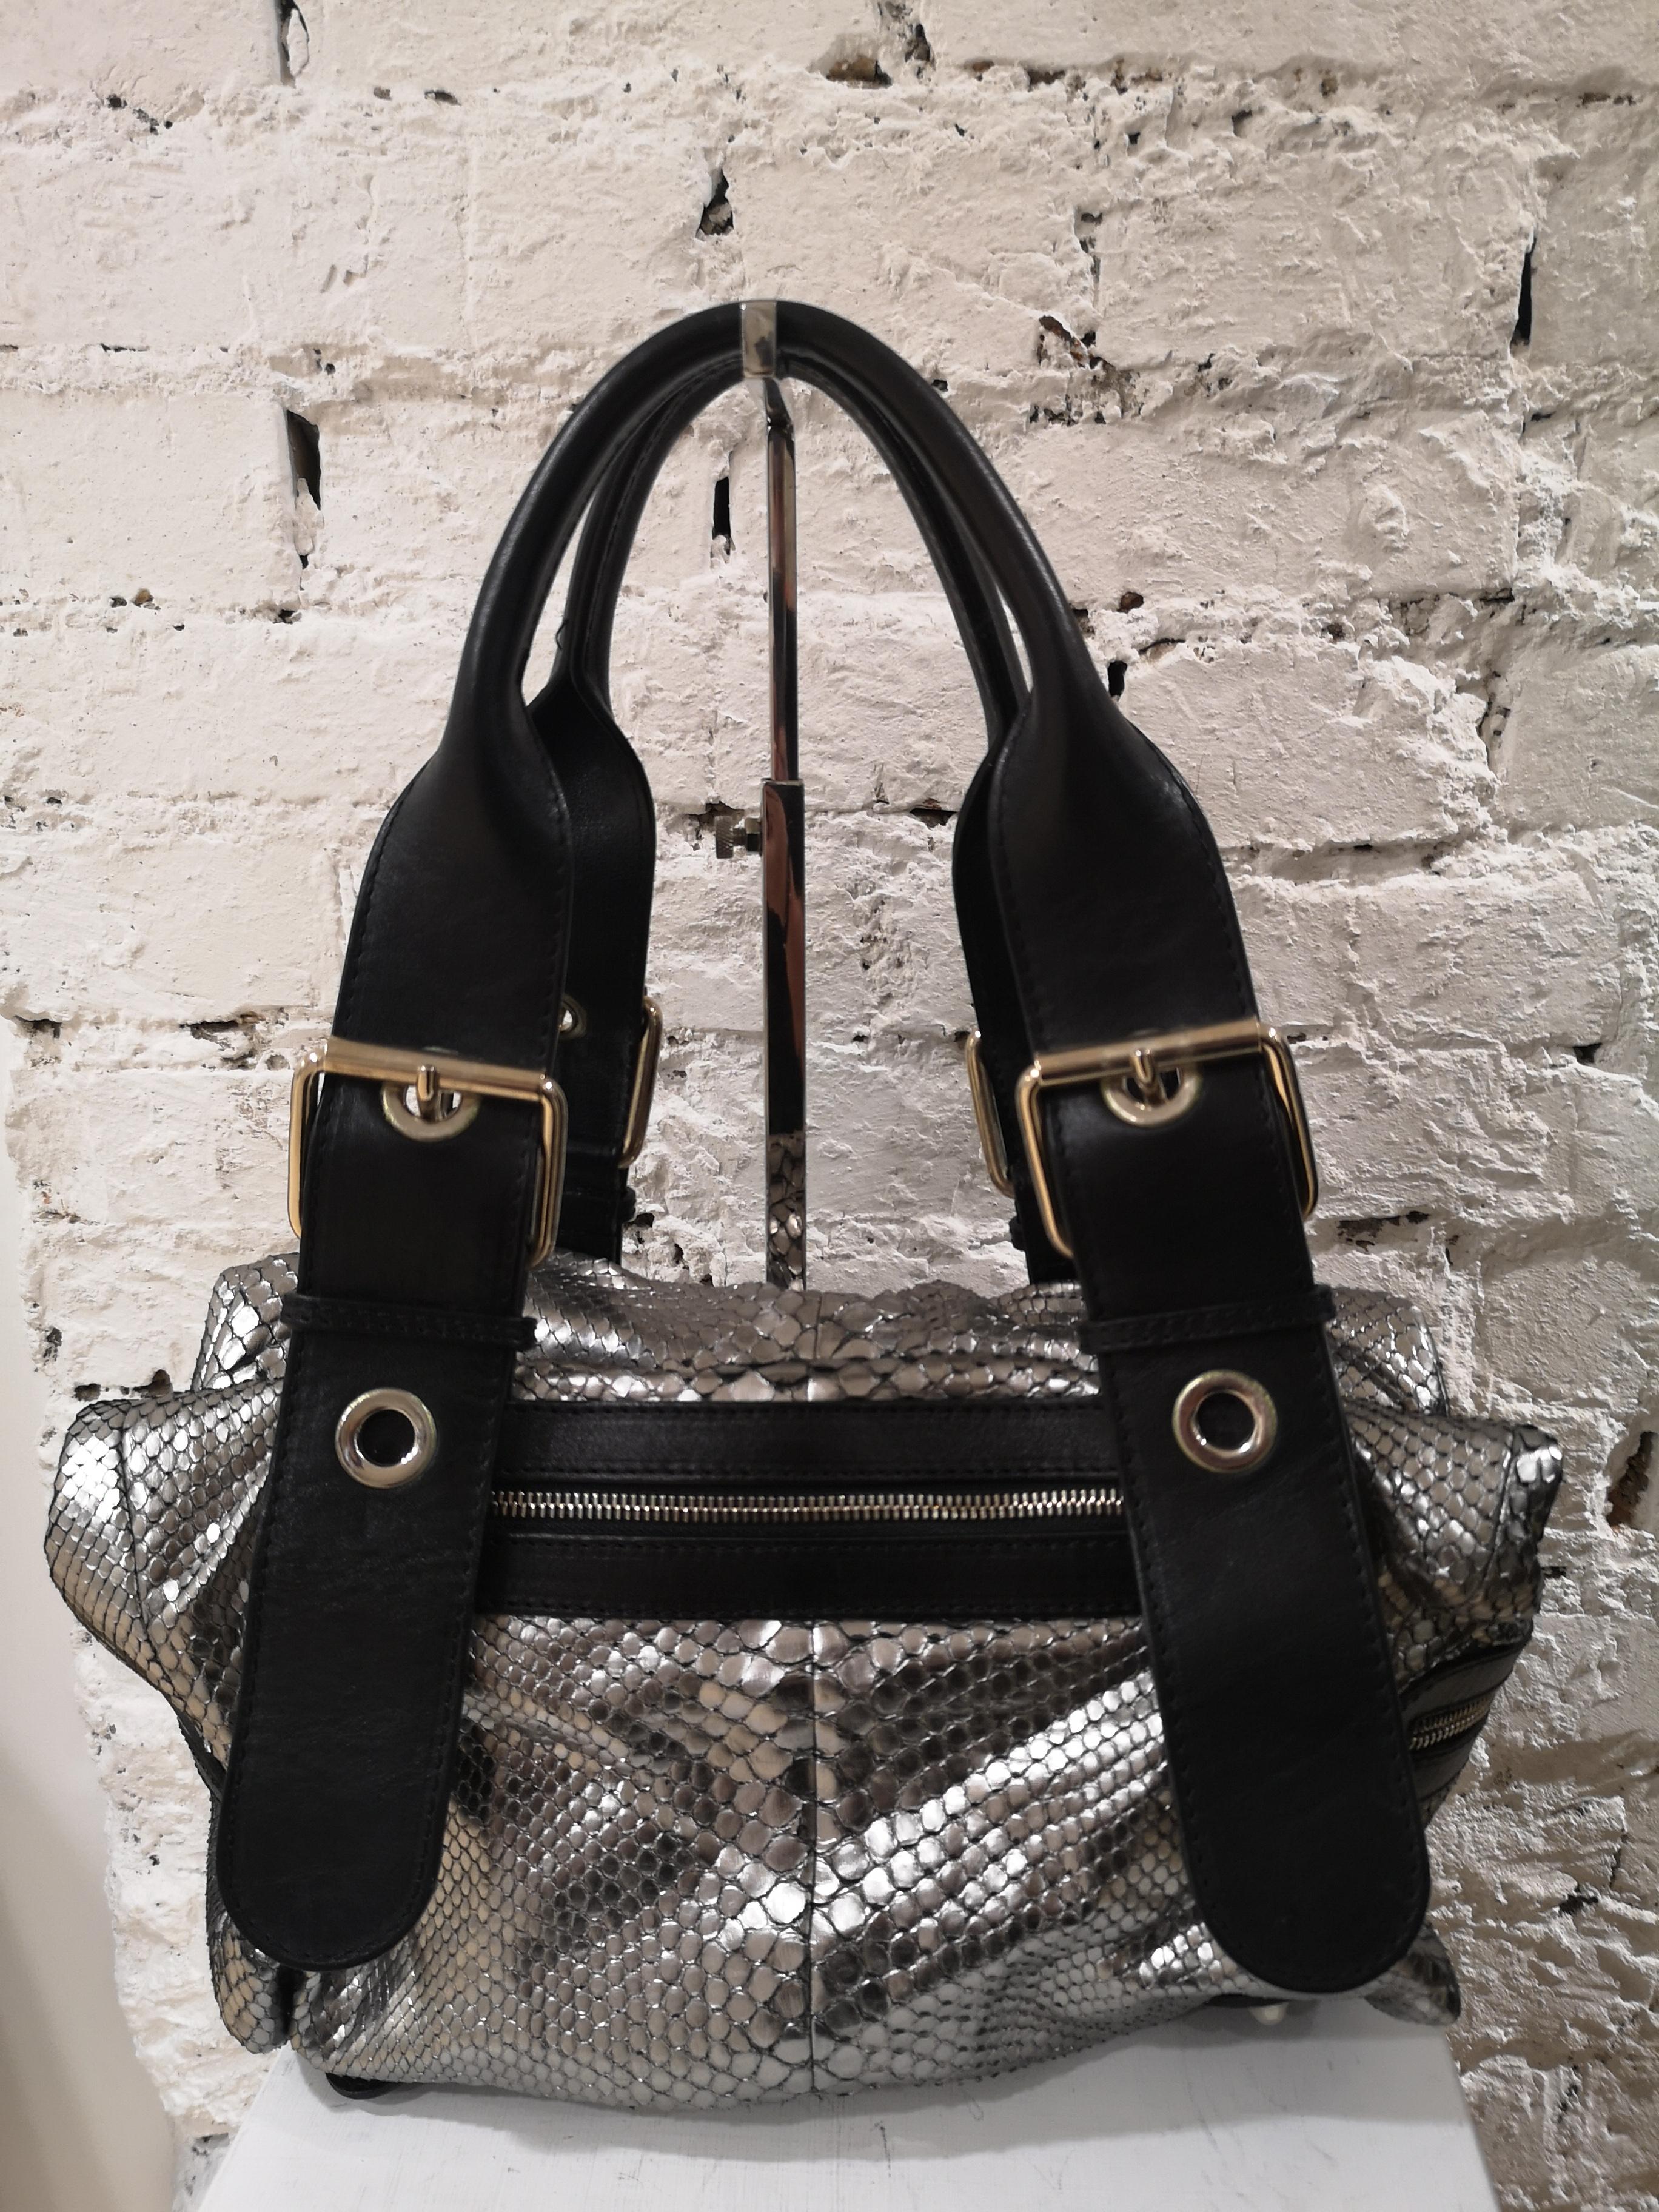 Chloè silver python skin black leather handbag 8